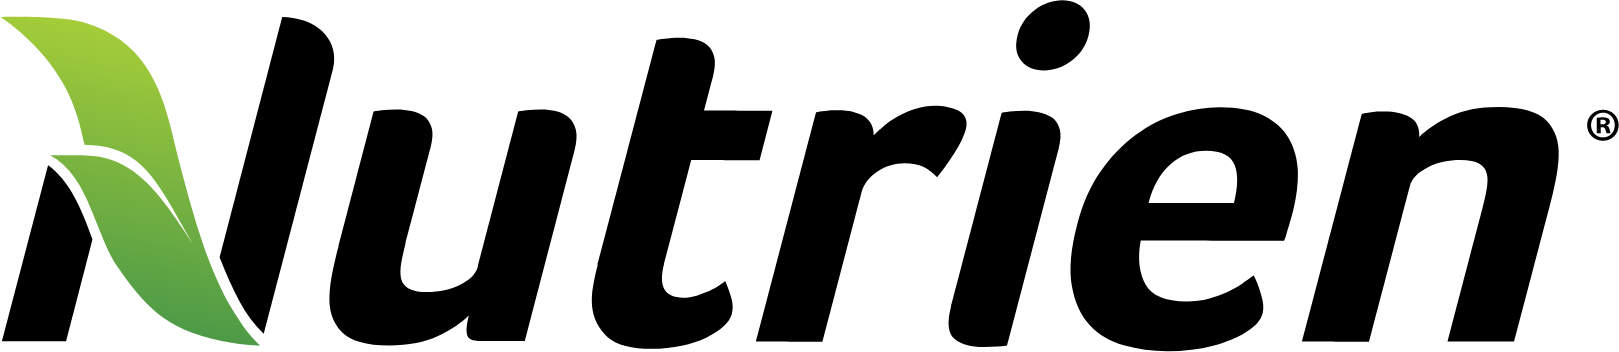 Nutrien logo large (transparent PNG)